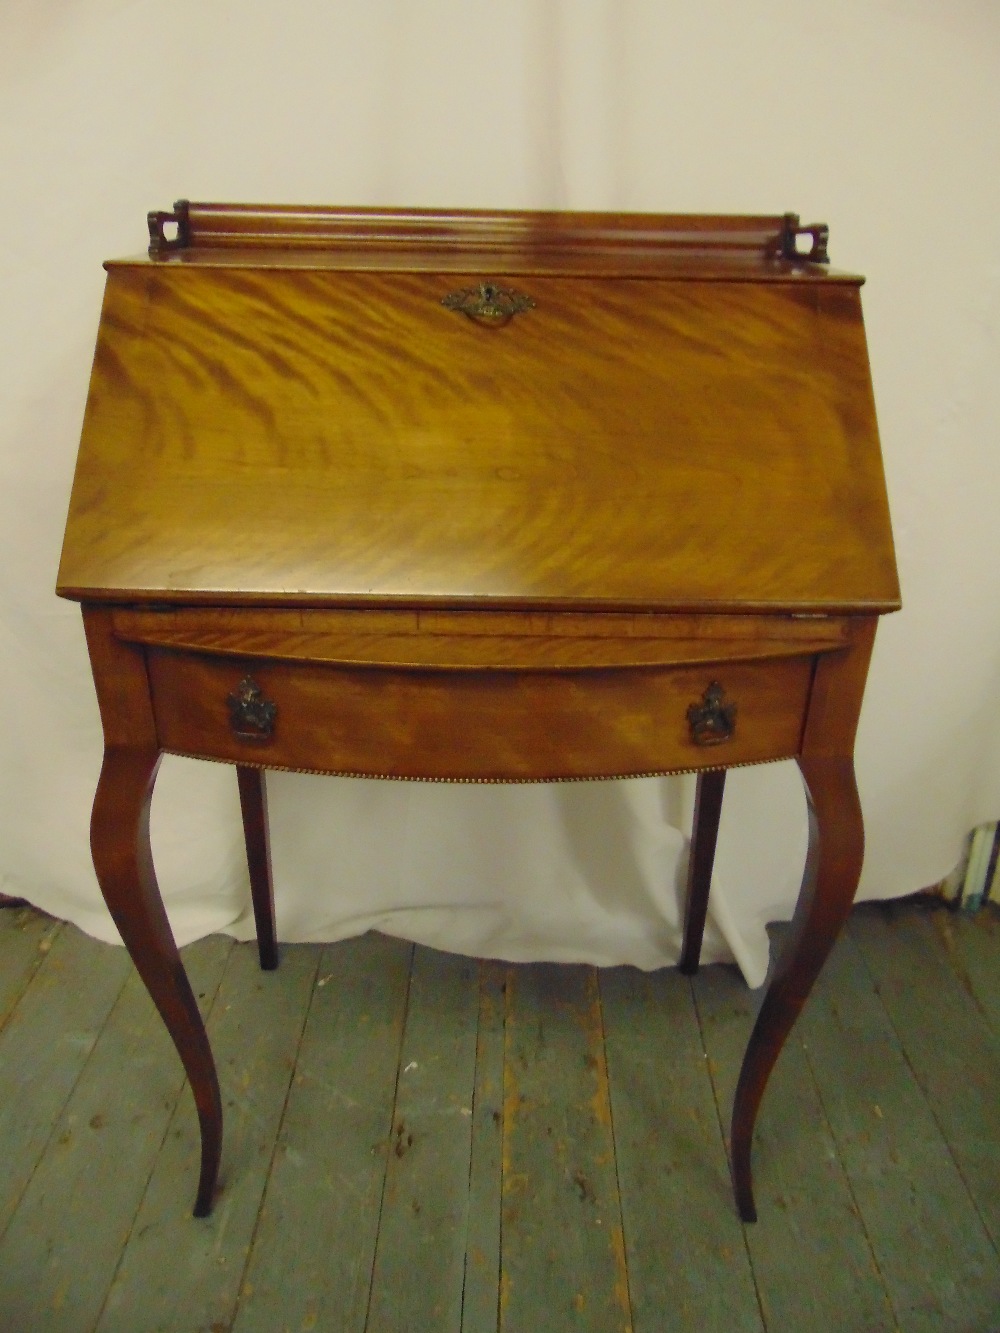 A 19th century rectangular mahogany drop flap bureau with single drop on four cabriole legs